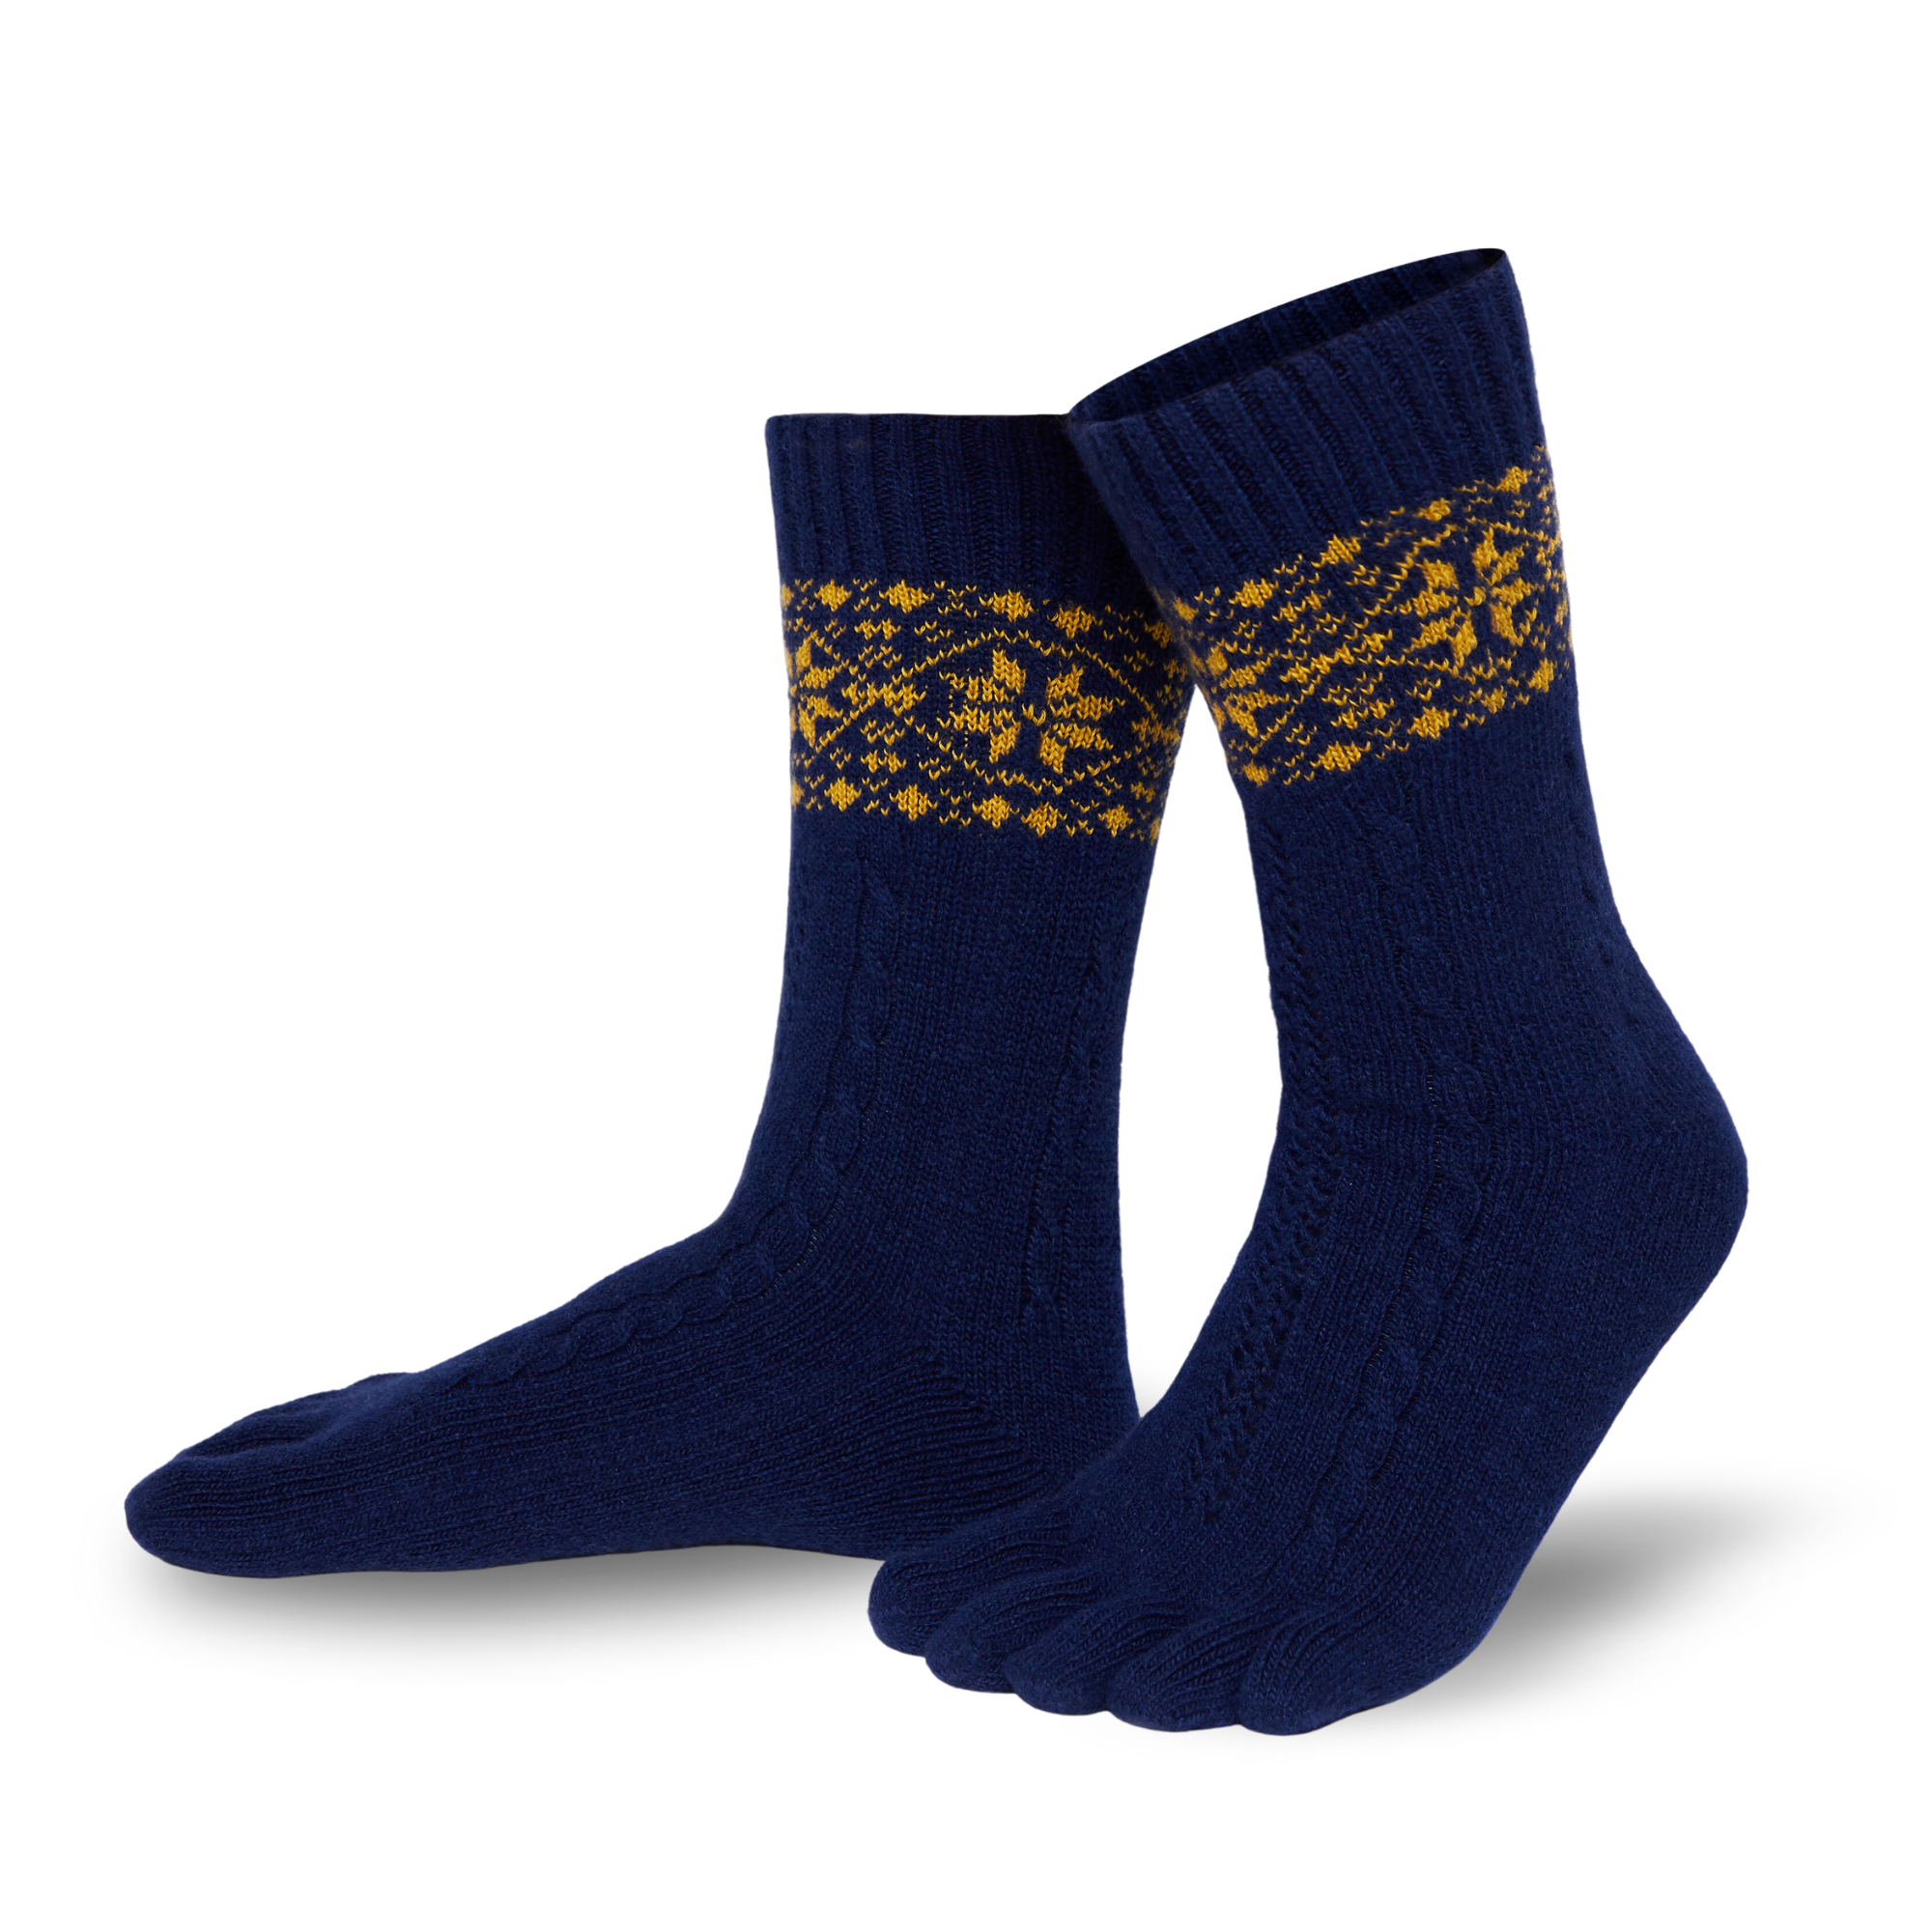 Knitido caldo calze con dita merino e cashmere con motivo snow fleck in blu/oro